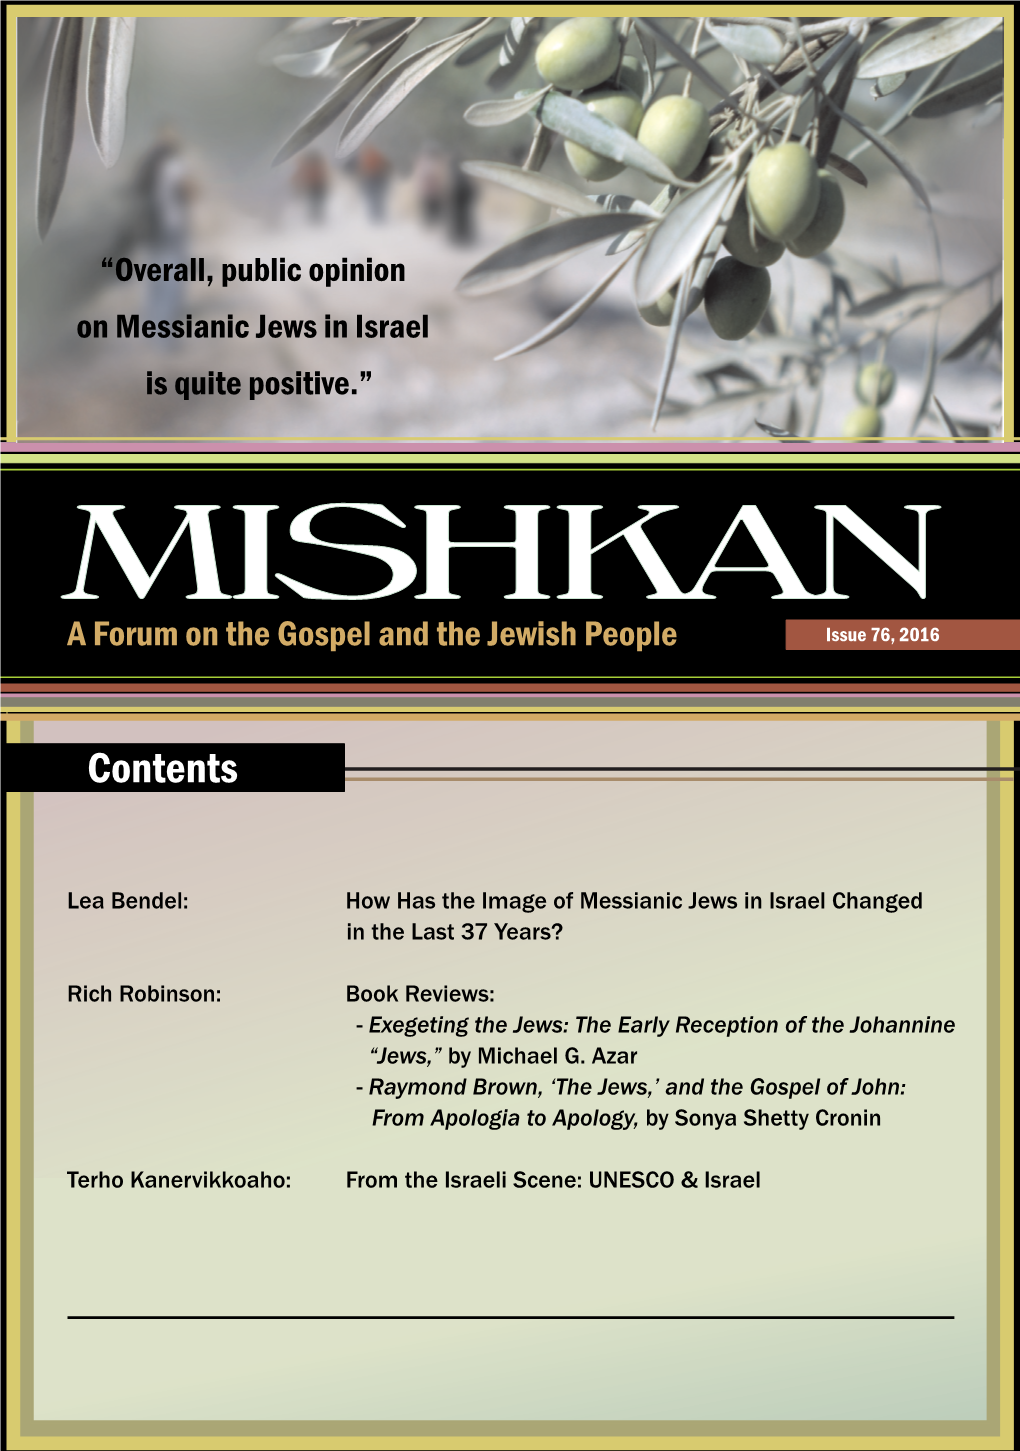 Mishkan Issue 76, 2016